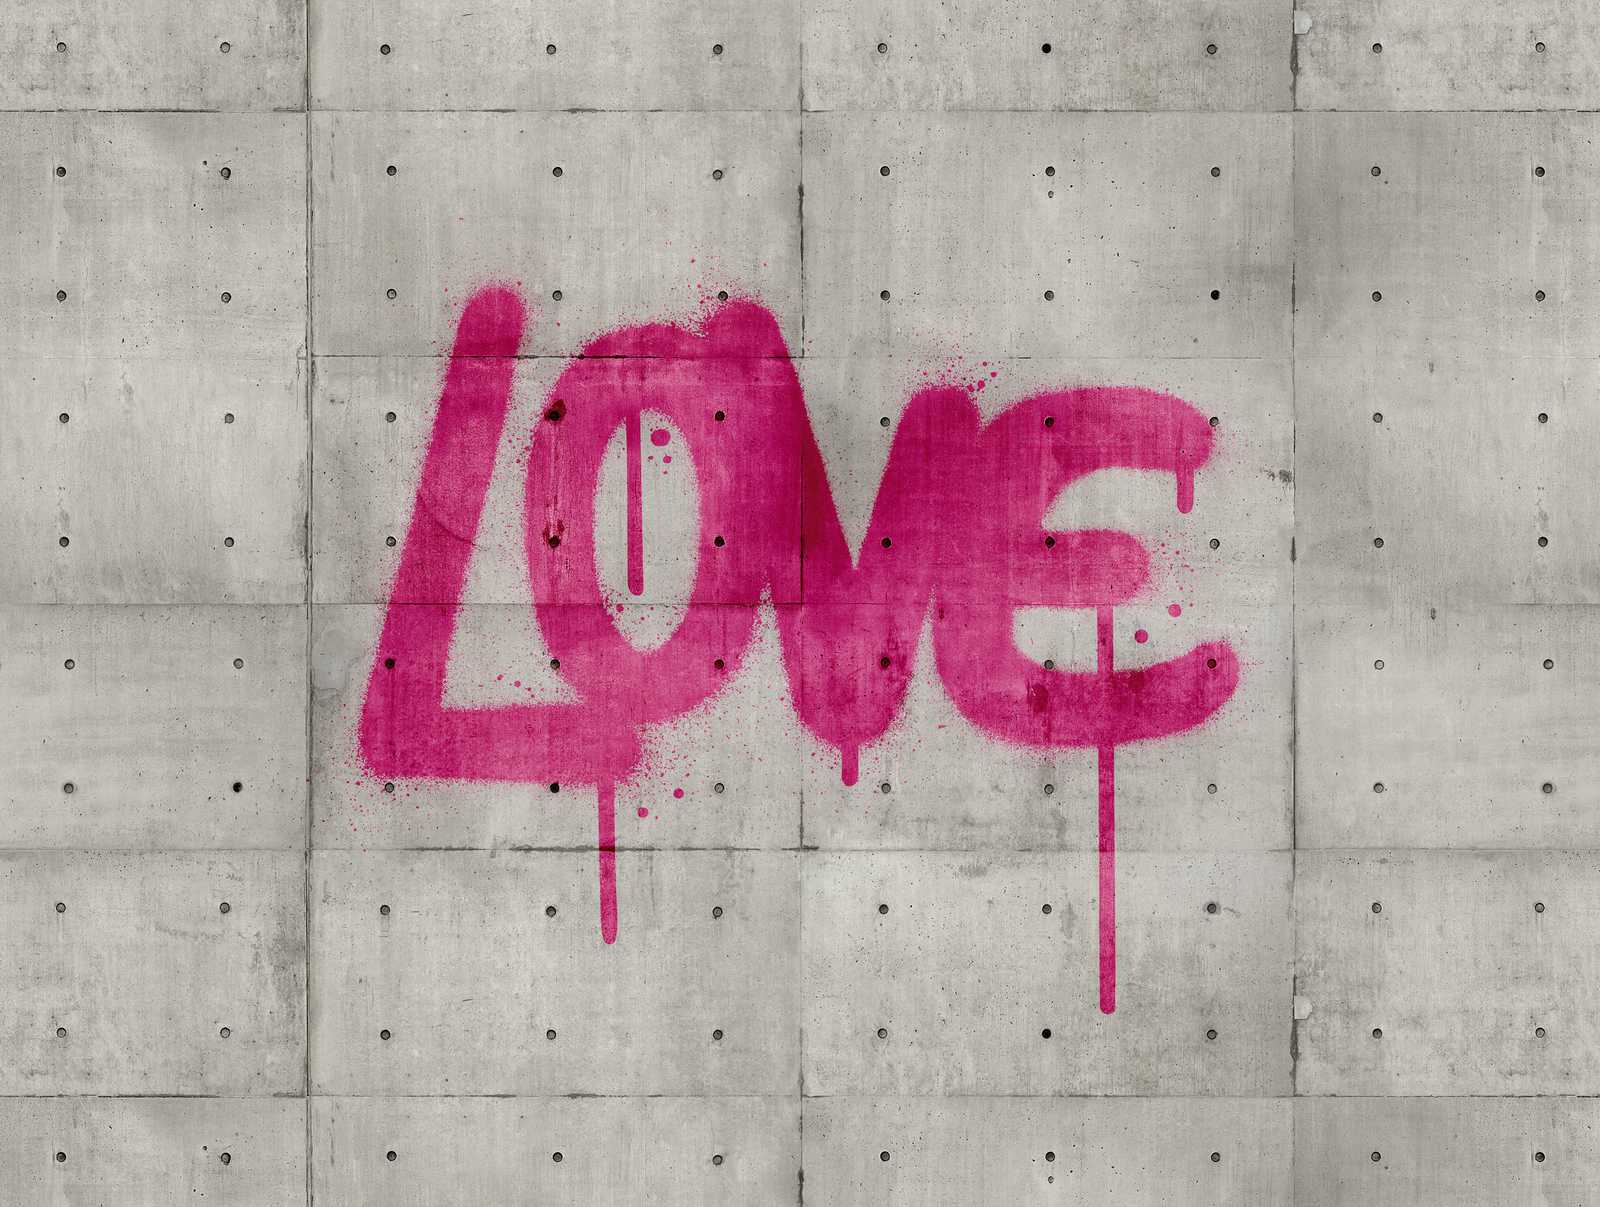             Wallpaper novelty - concrete motif wallpaper LOVE graffiti, grey & pink
        